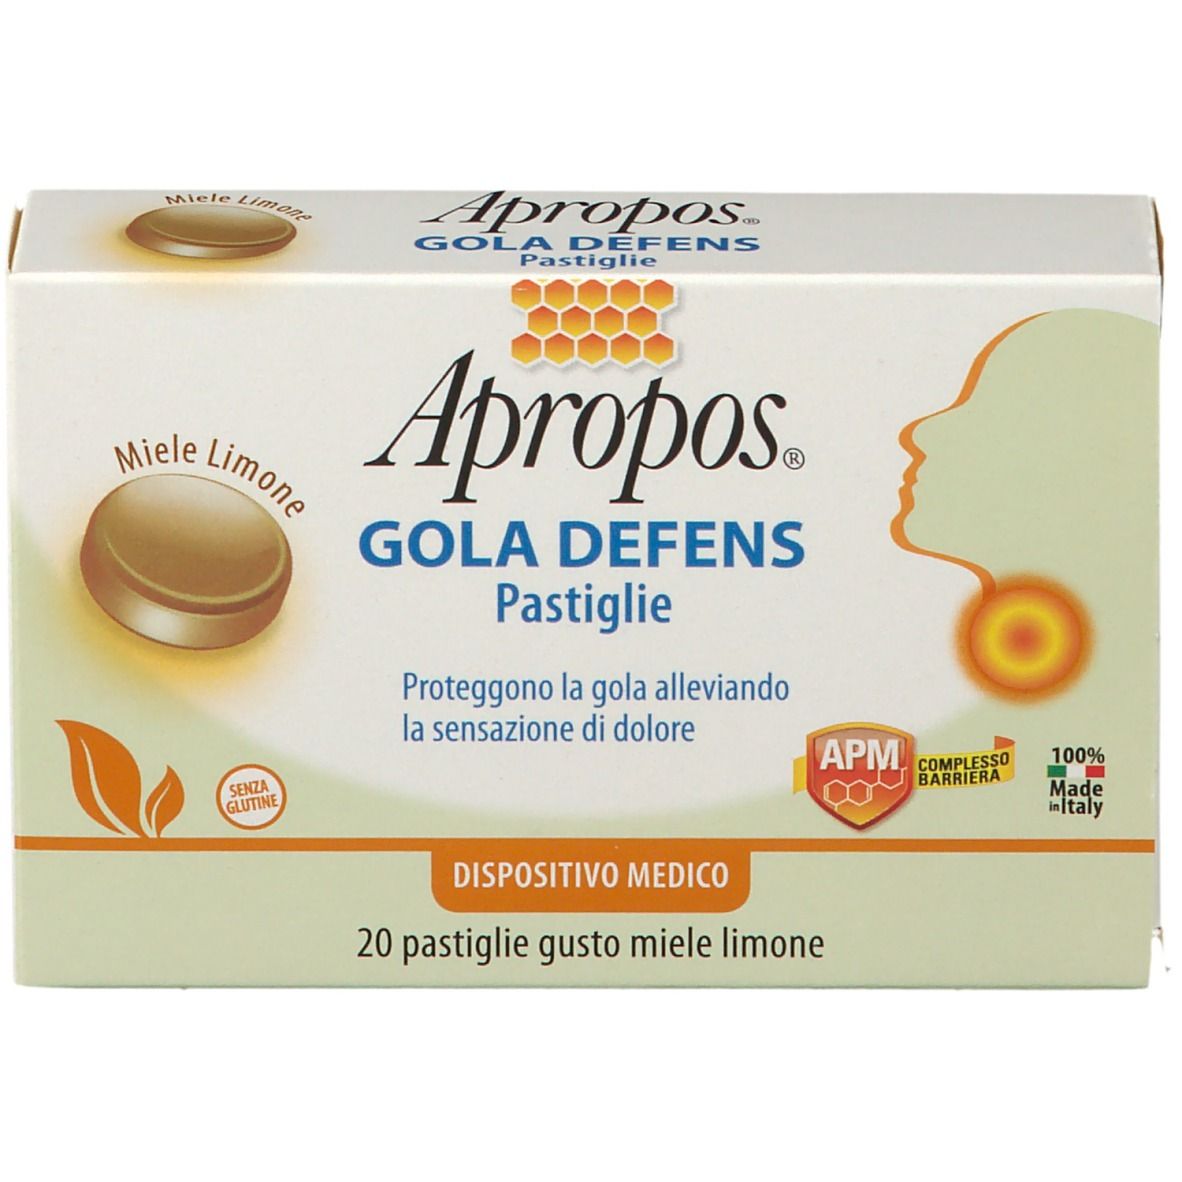 Apropos® Gola Defens Pastiglie Miele & Limone